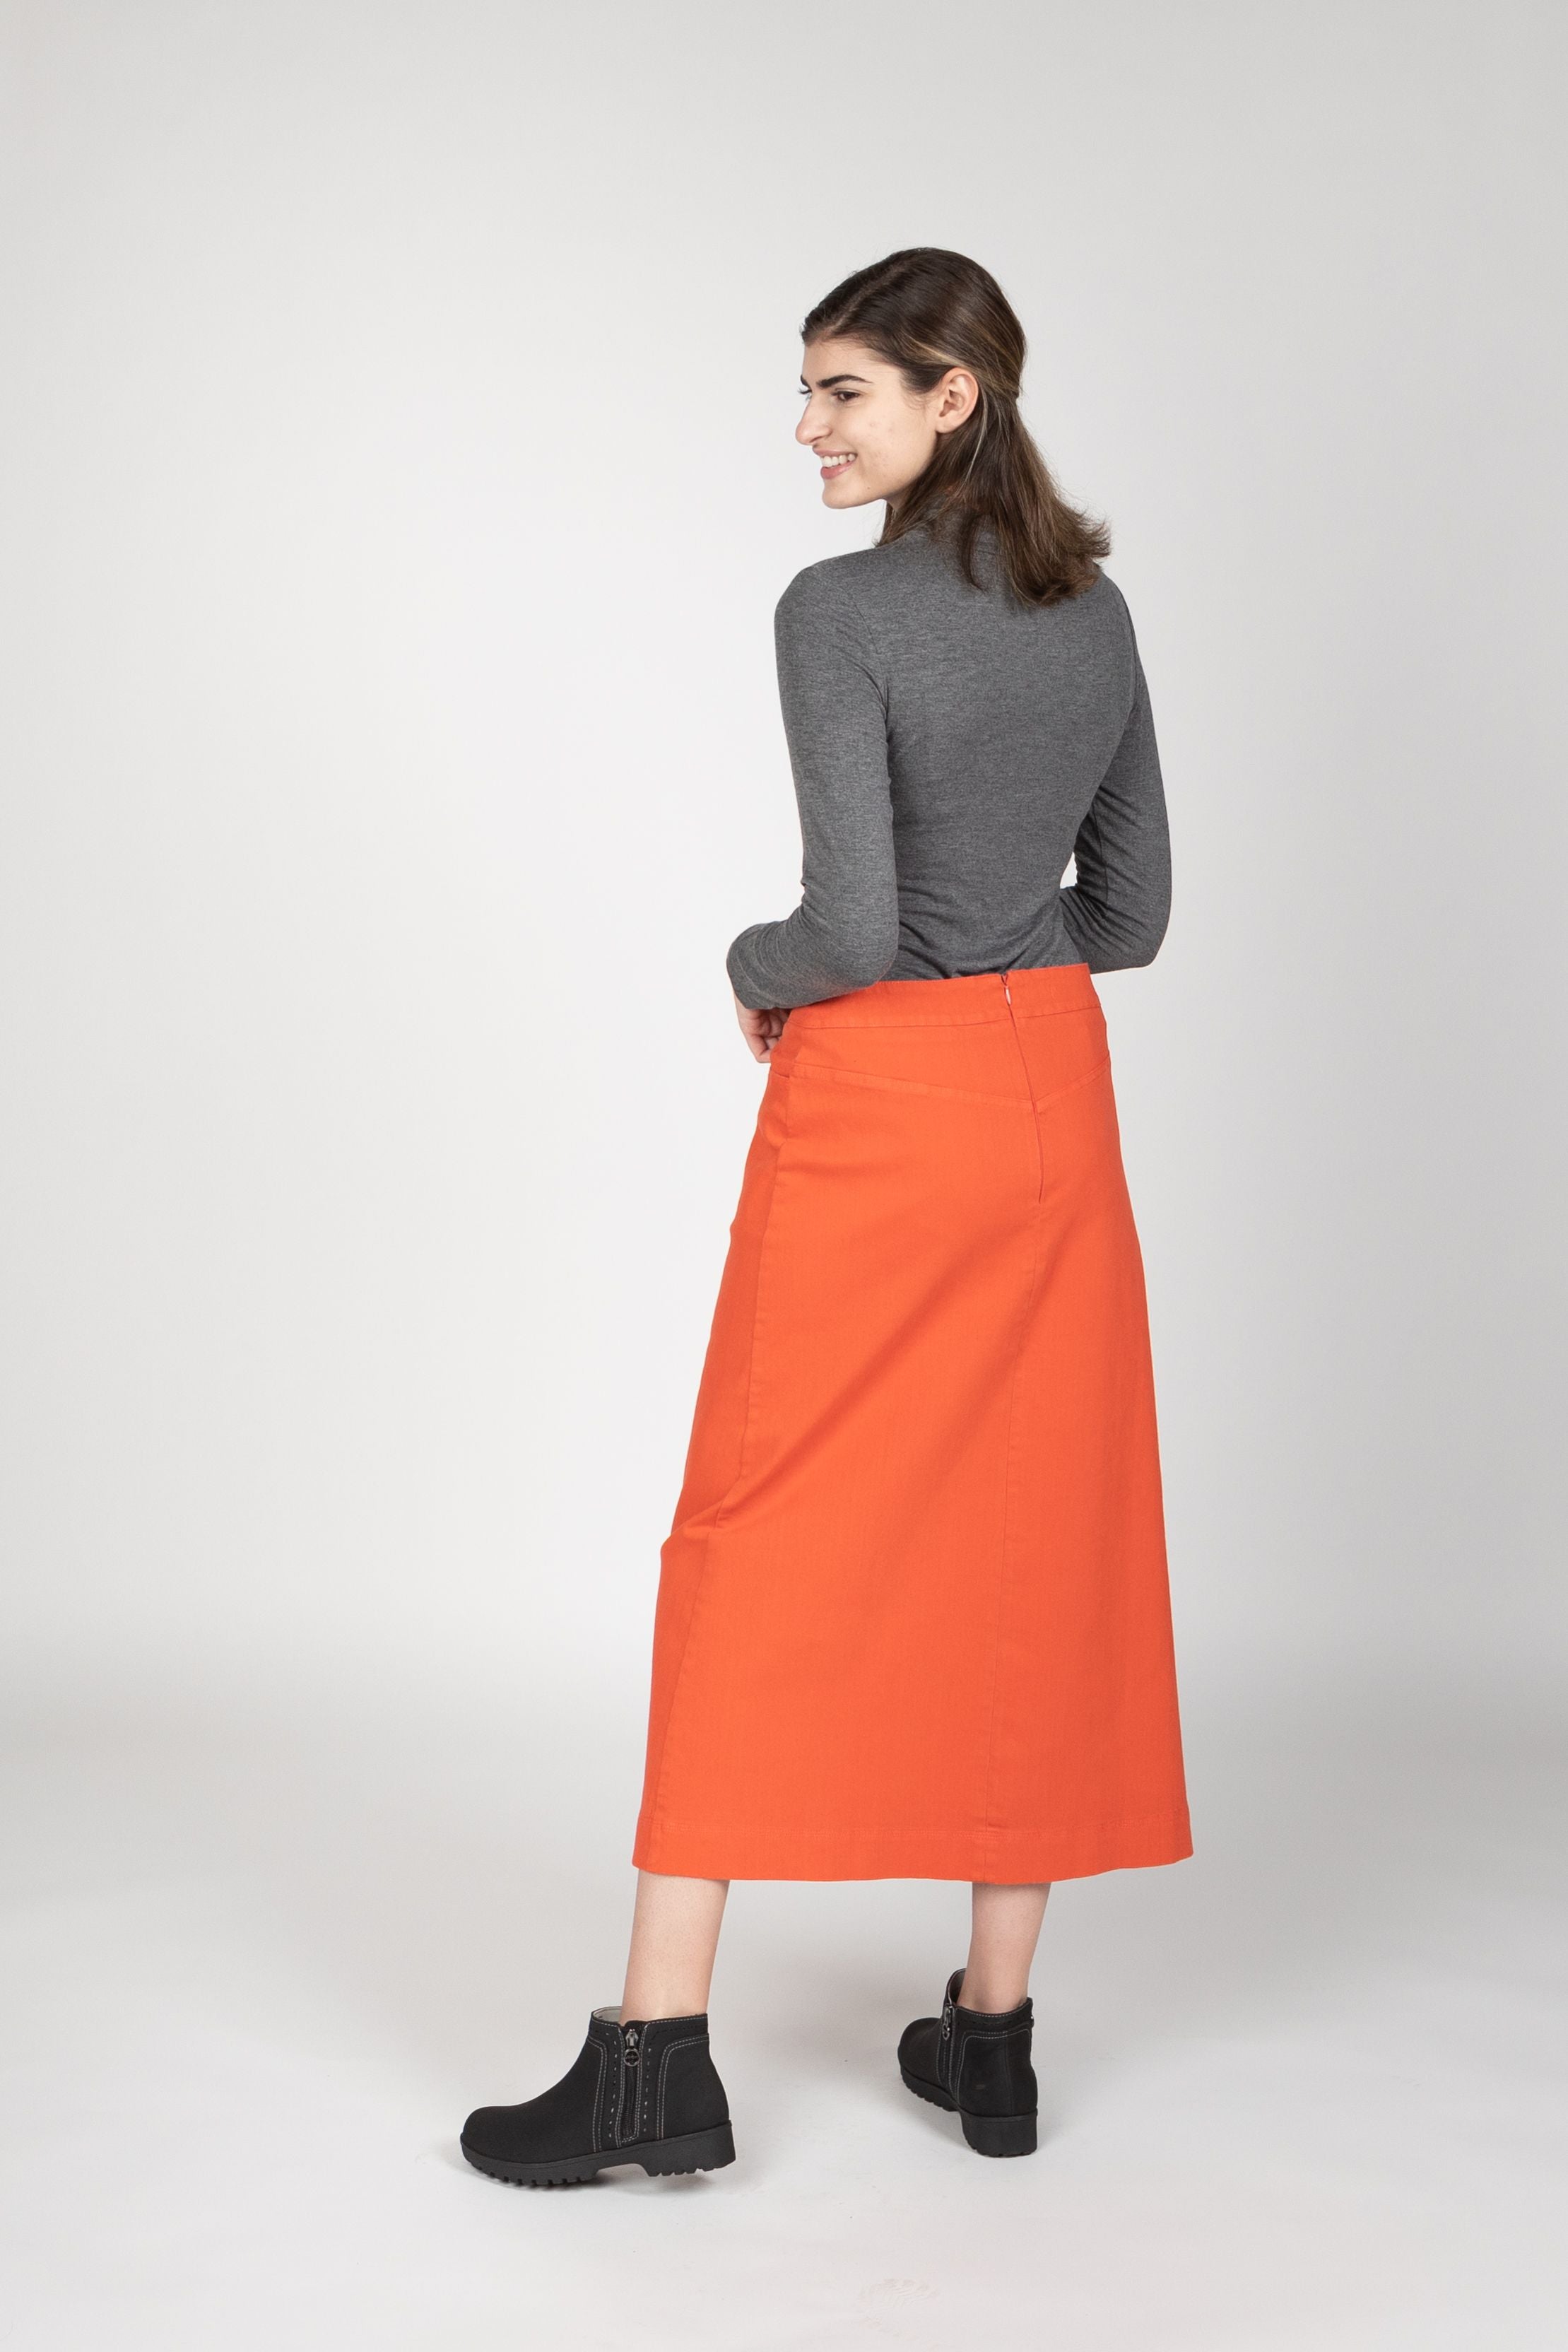 nC Classic Orange Red Denim Skirt – newCreation Apparel